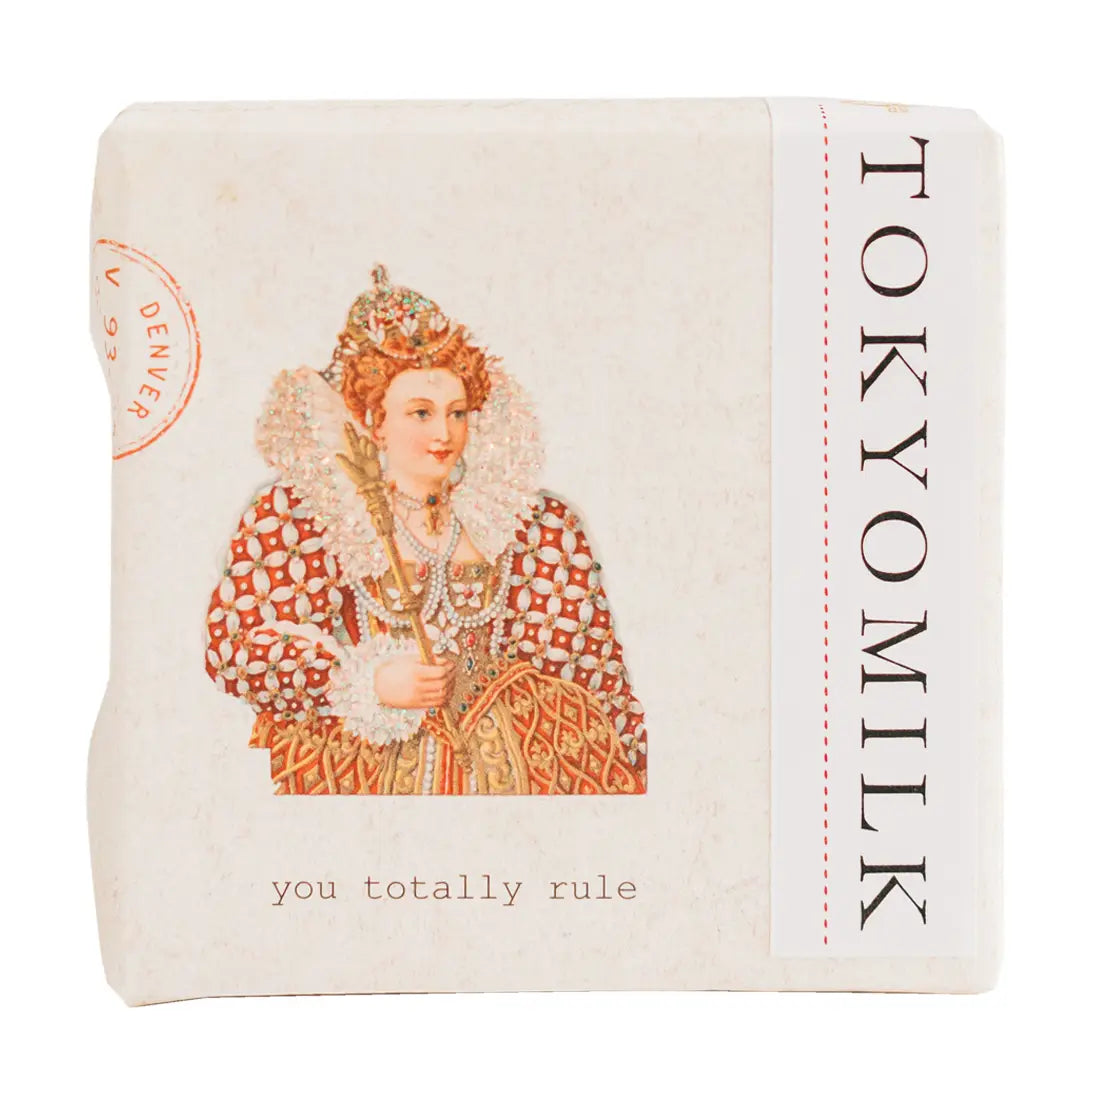 Tokyomilk "You Totally Rule" Finest Perfumed Soap – Green Tea Fragrance - 4oz